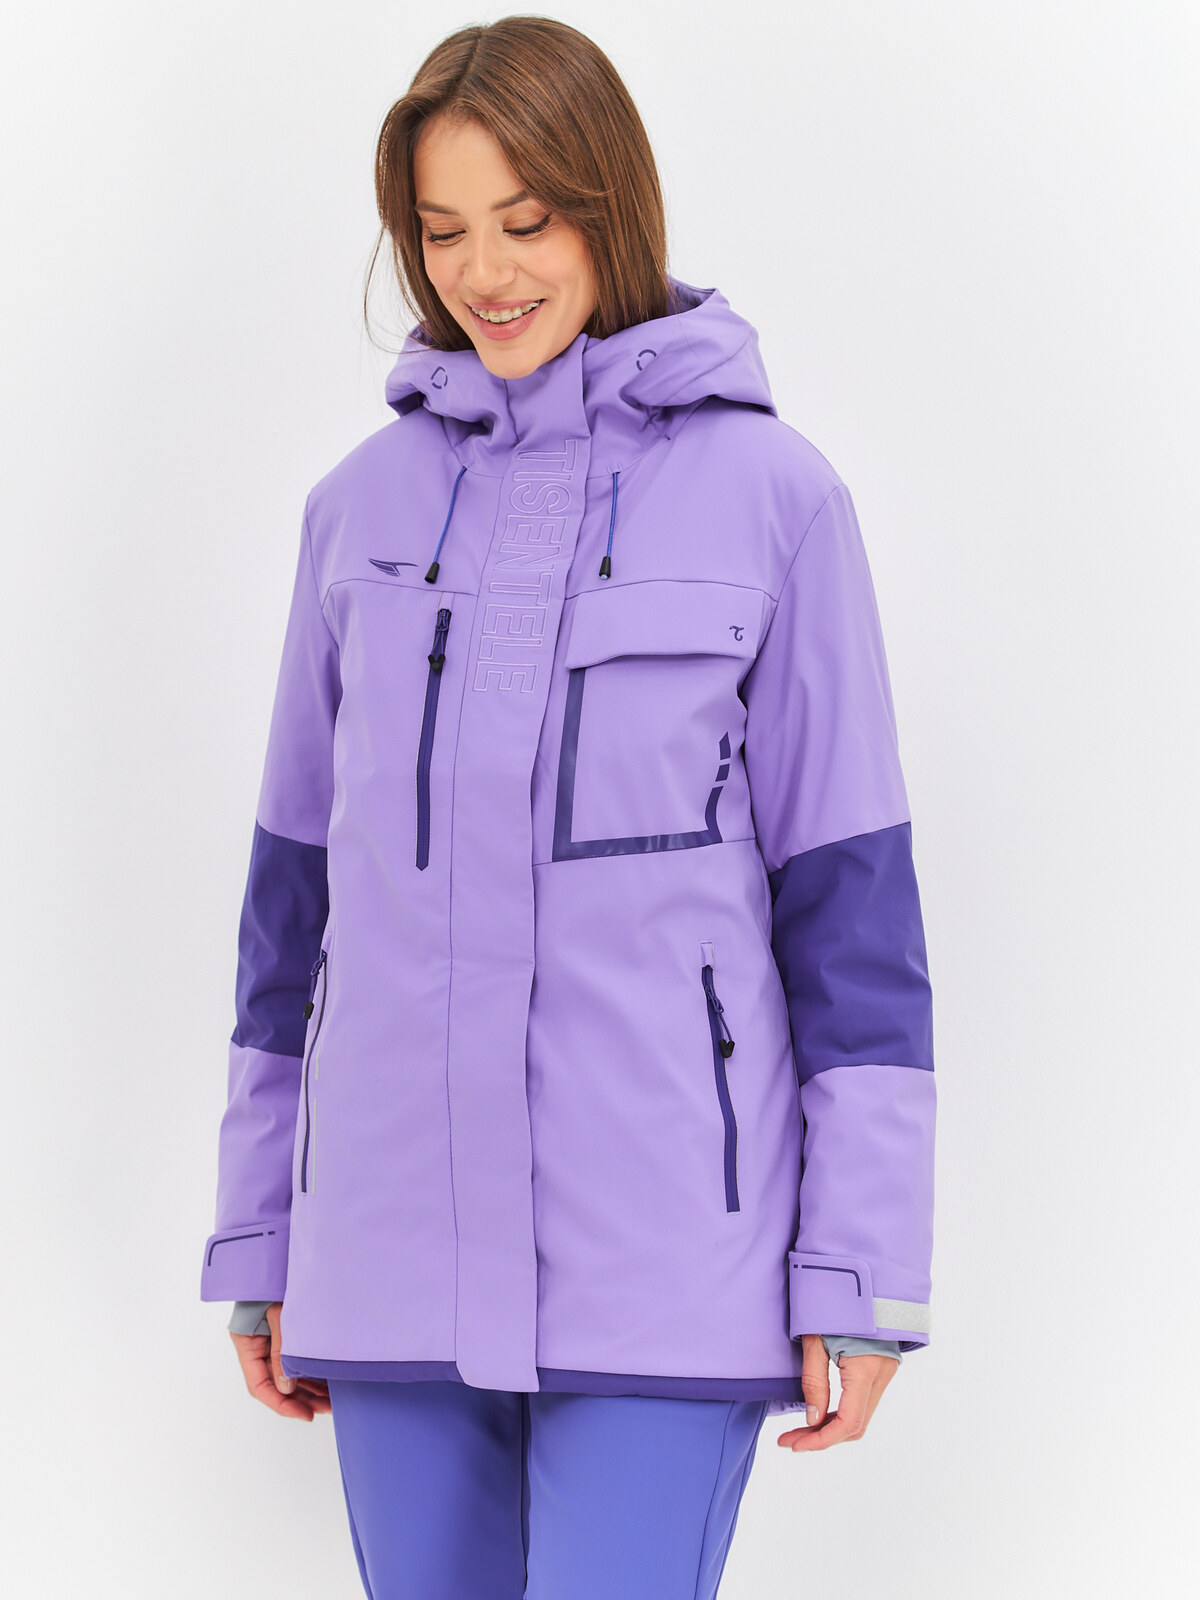 Куртка Tisentele Фиолетовый, 847679 (52, 3xl)